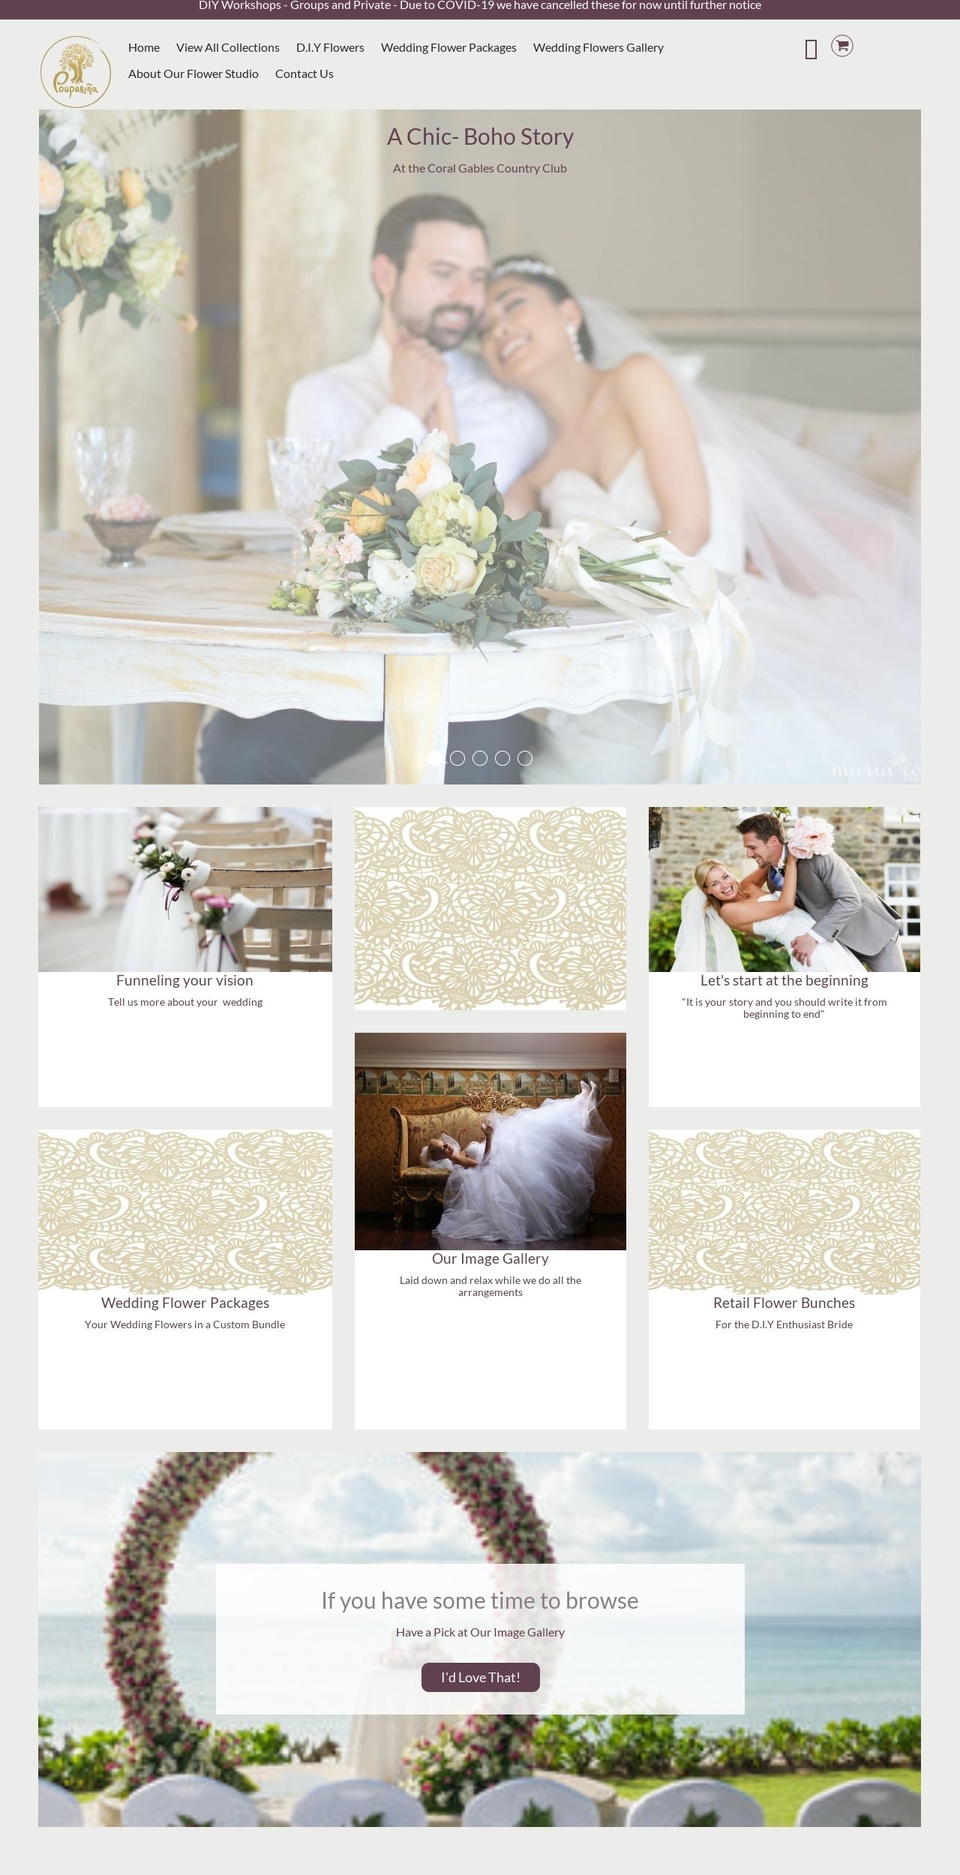 weddingflowers.miami shopify website screenshot